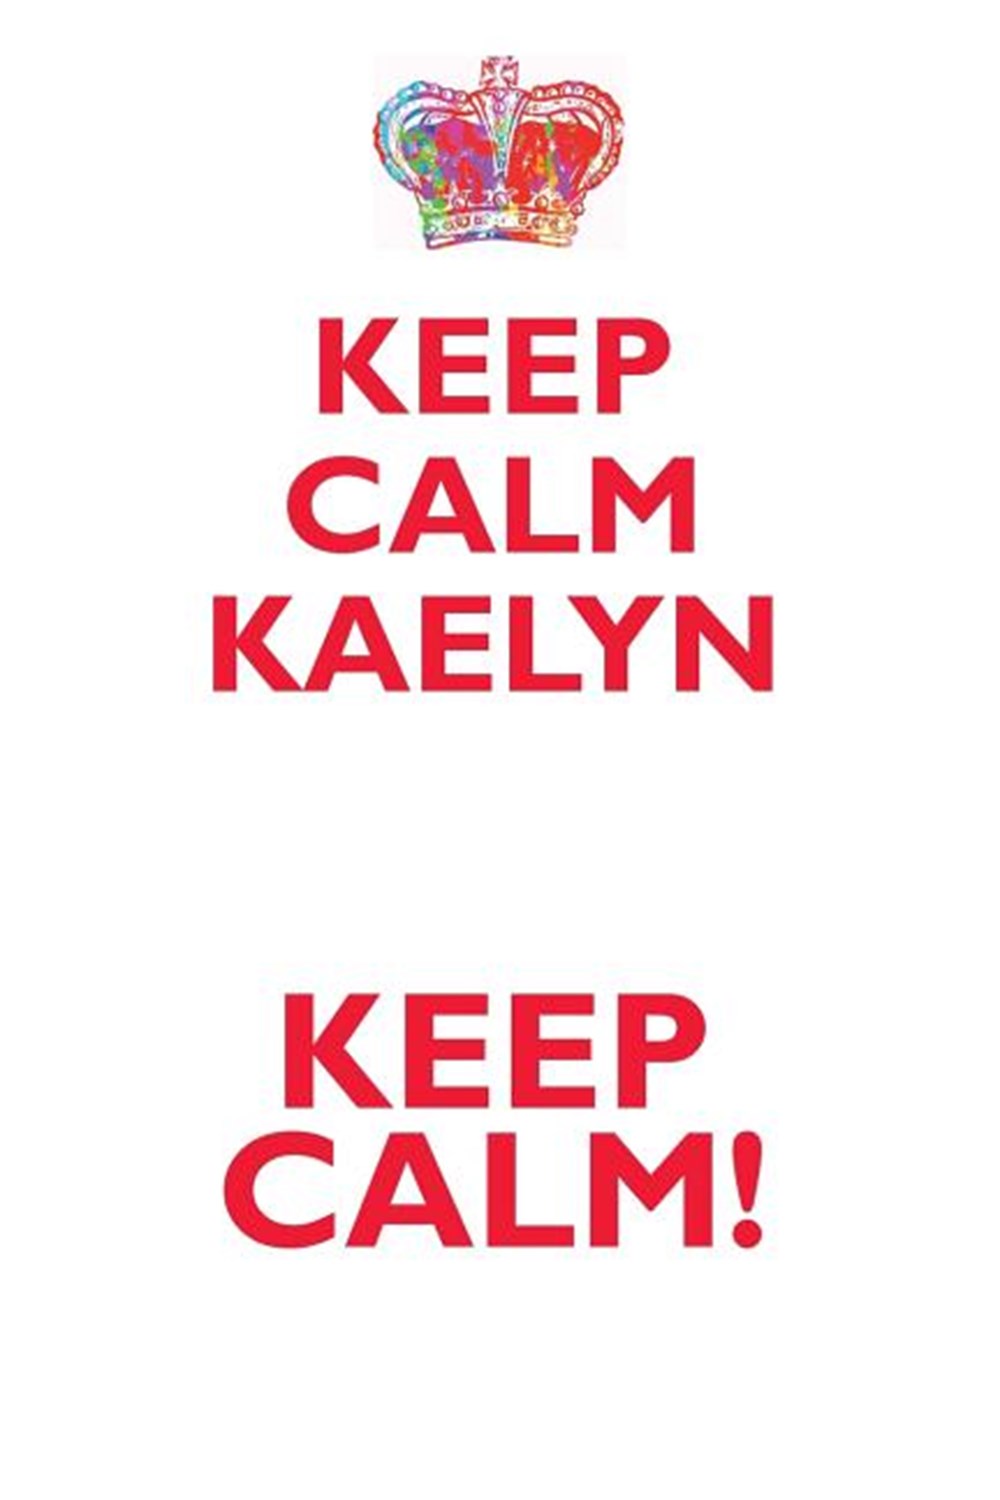 KEEP CALM KAELYN! AFFIRMATIONS WORKBOOK Positive Affirmations Workbook Includes Mentoring Questions,